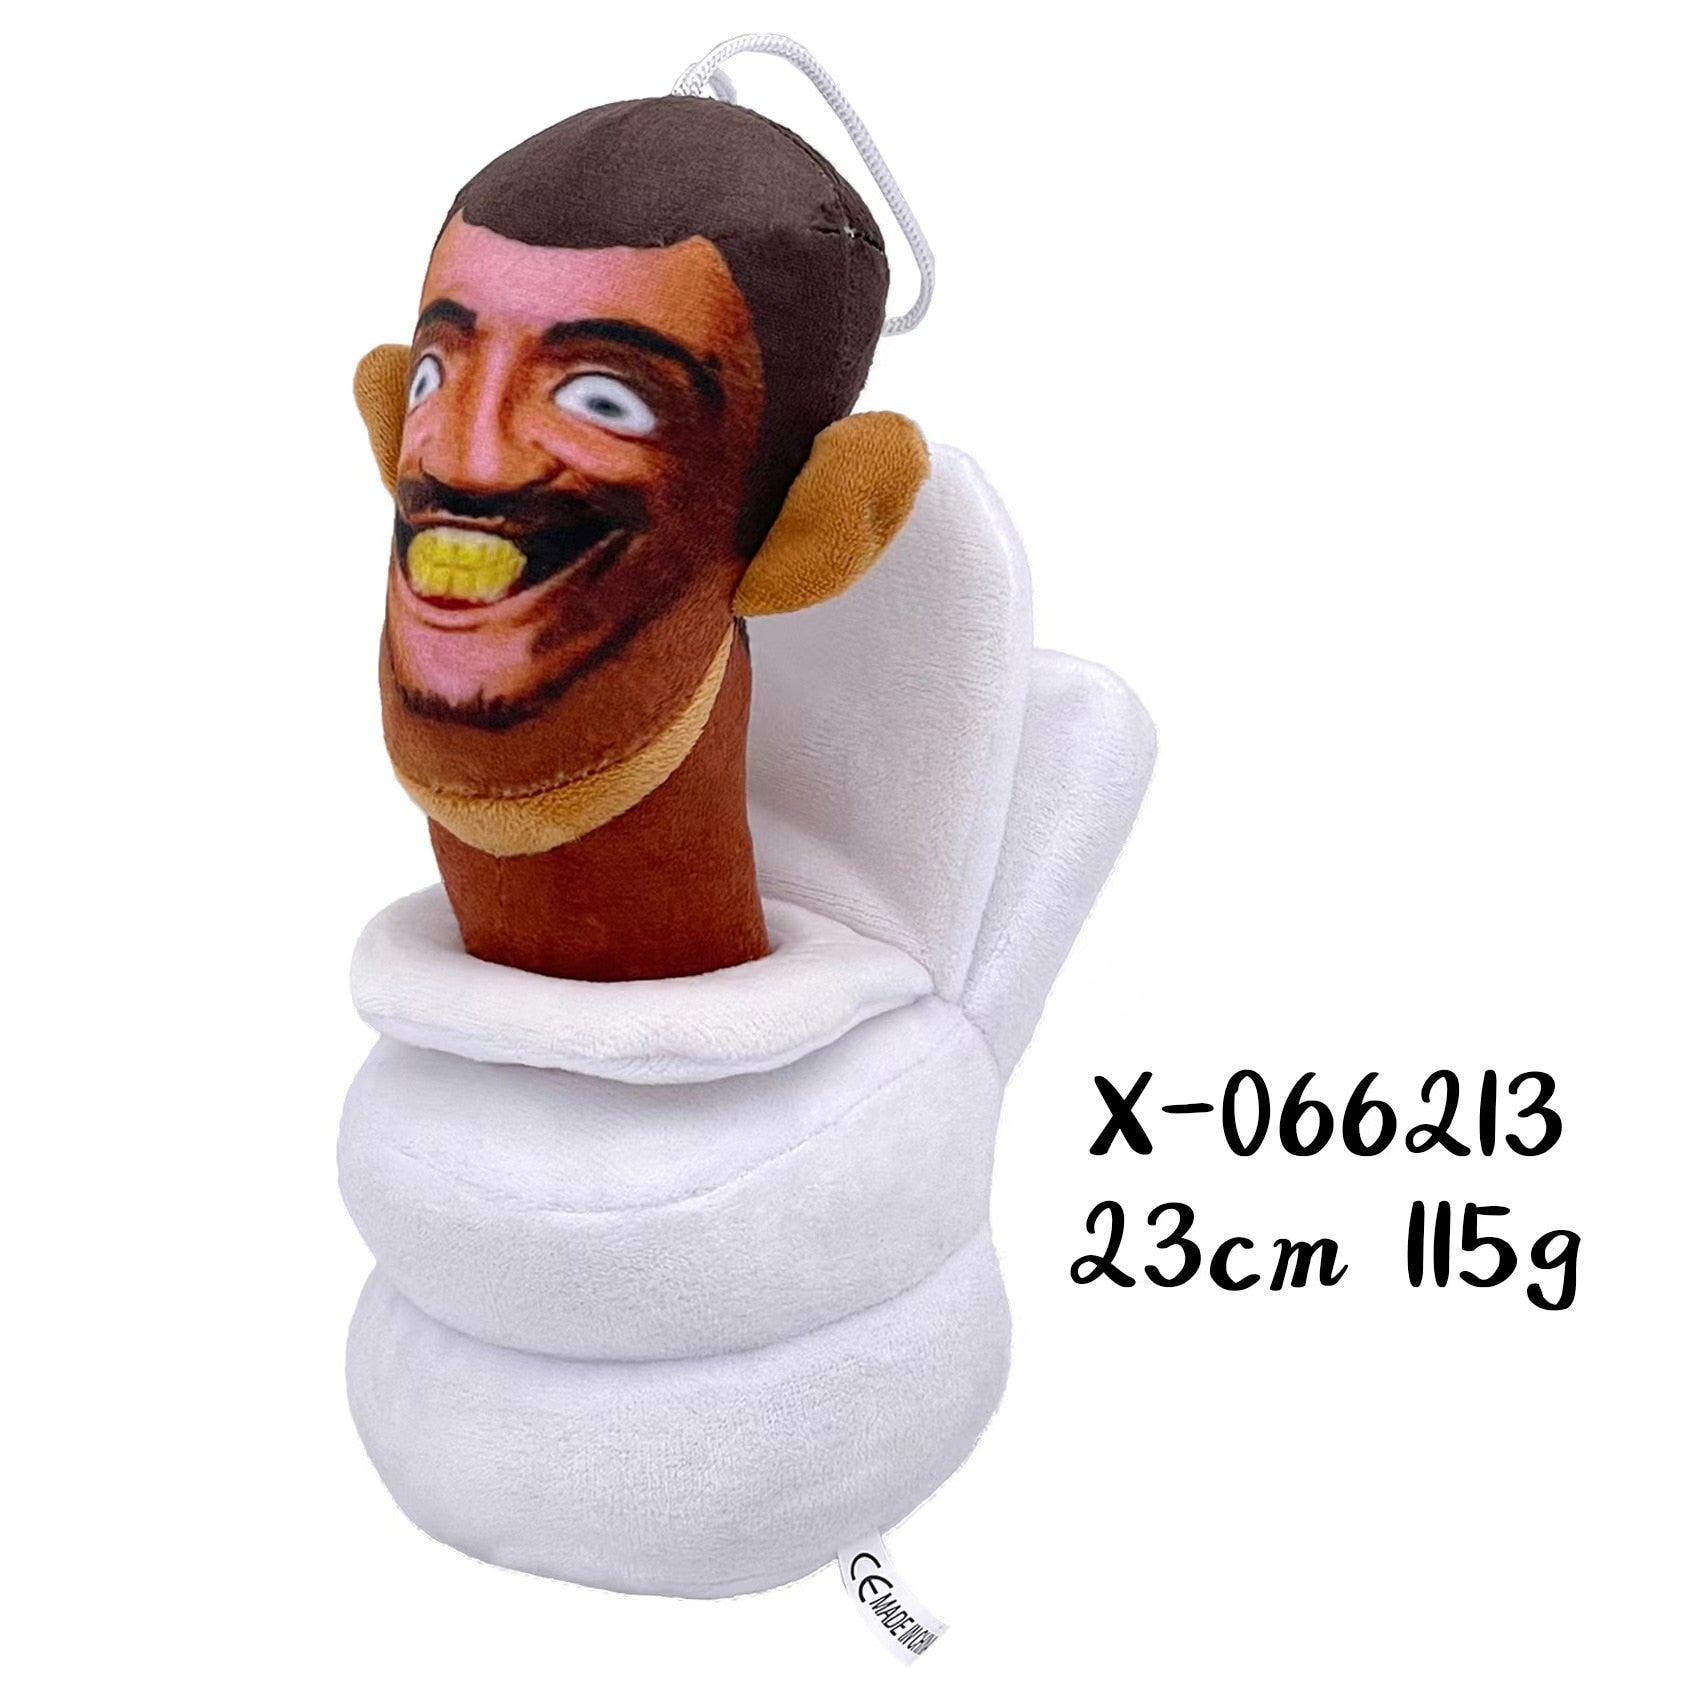 Skibidi Toilet Plush: Soft & Cuddly Meme Doll